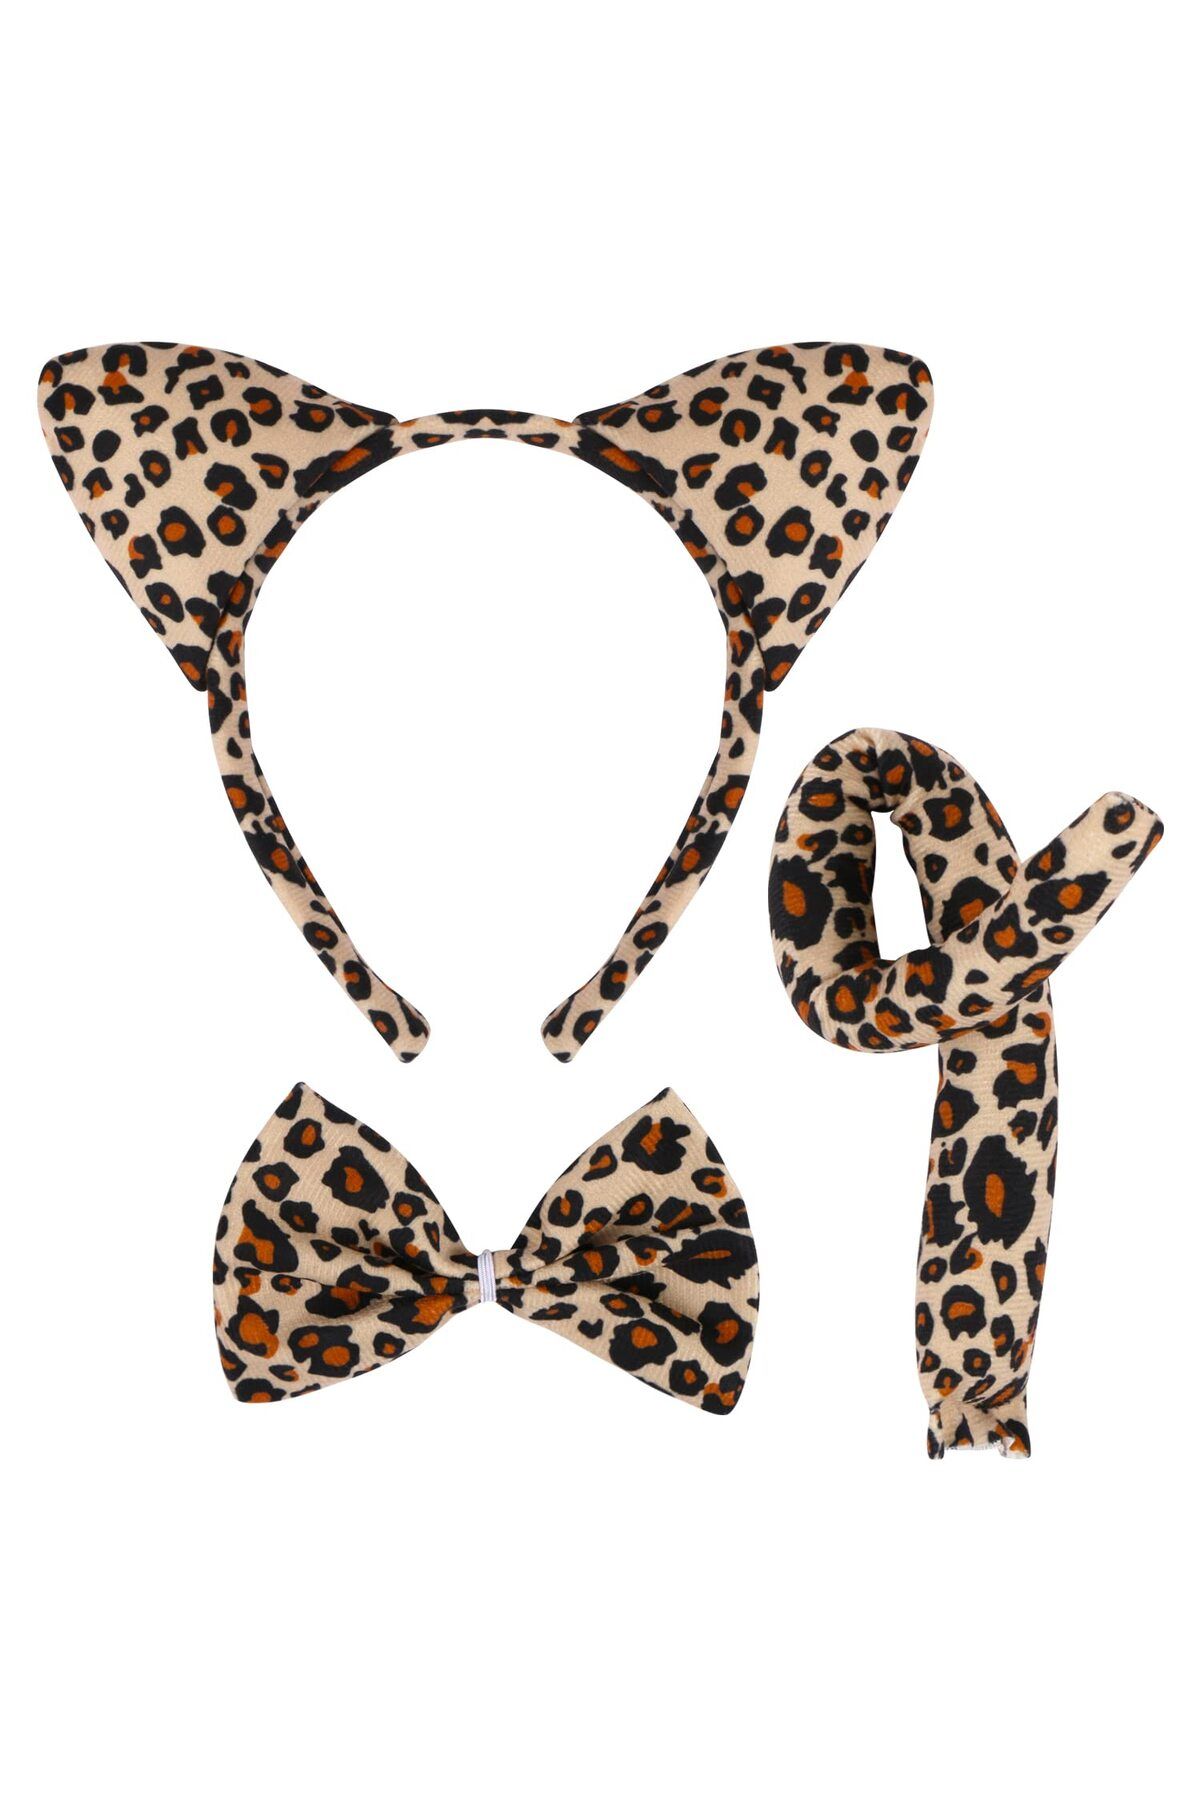 karinabest Leopard Ears Headband Tail and Bow Tie Animal Fancy Dress Cat Kostüm Parti Halloween